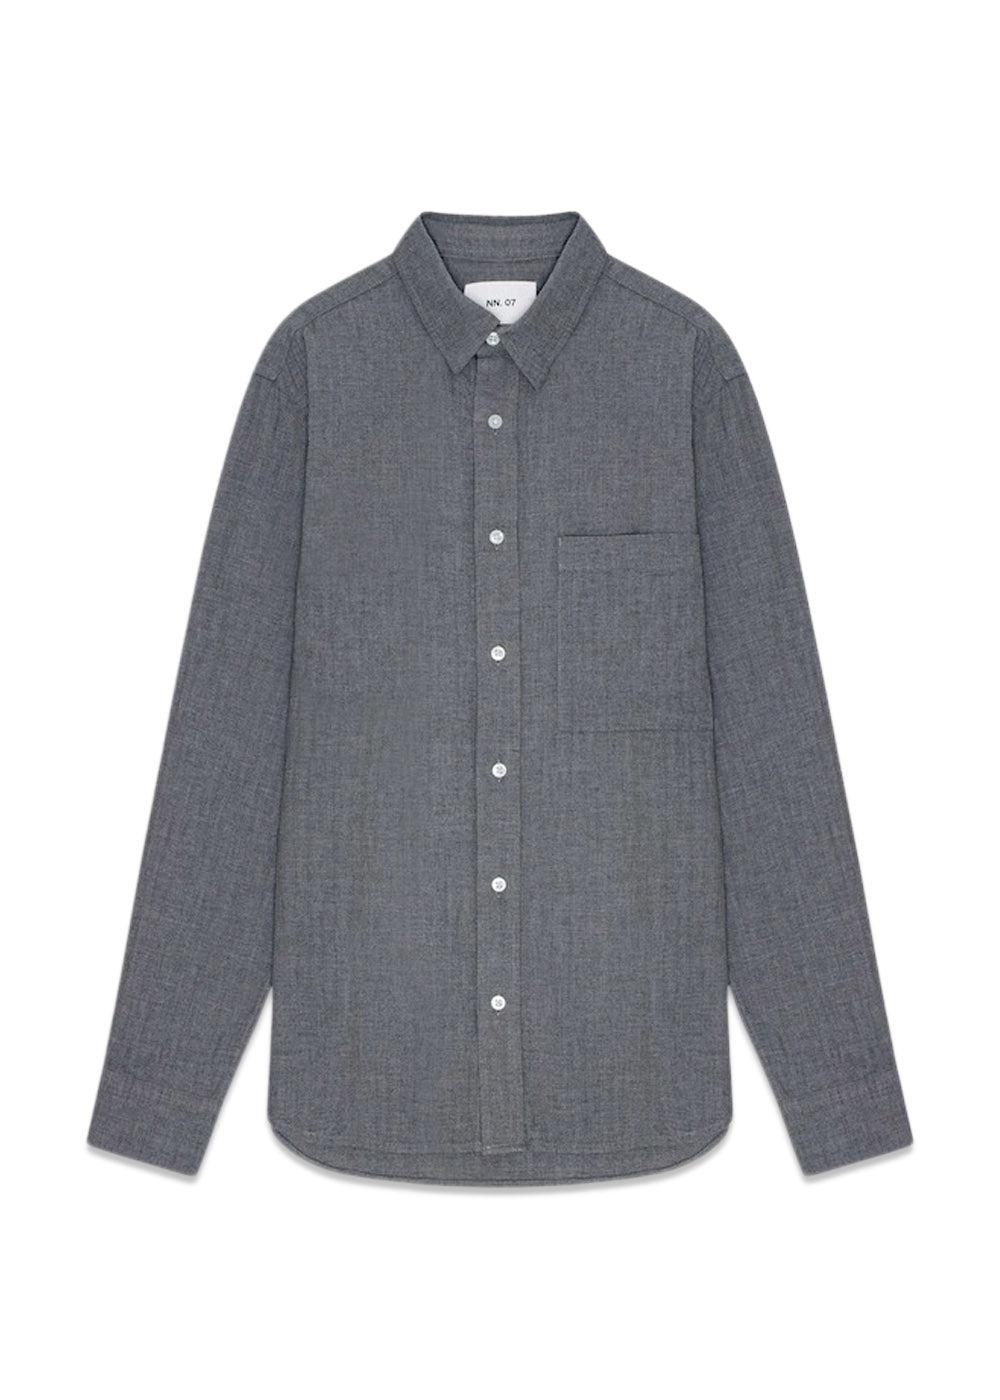 Cohen Shirt 5726 - Dark Grey